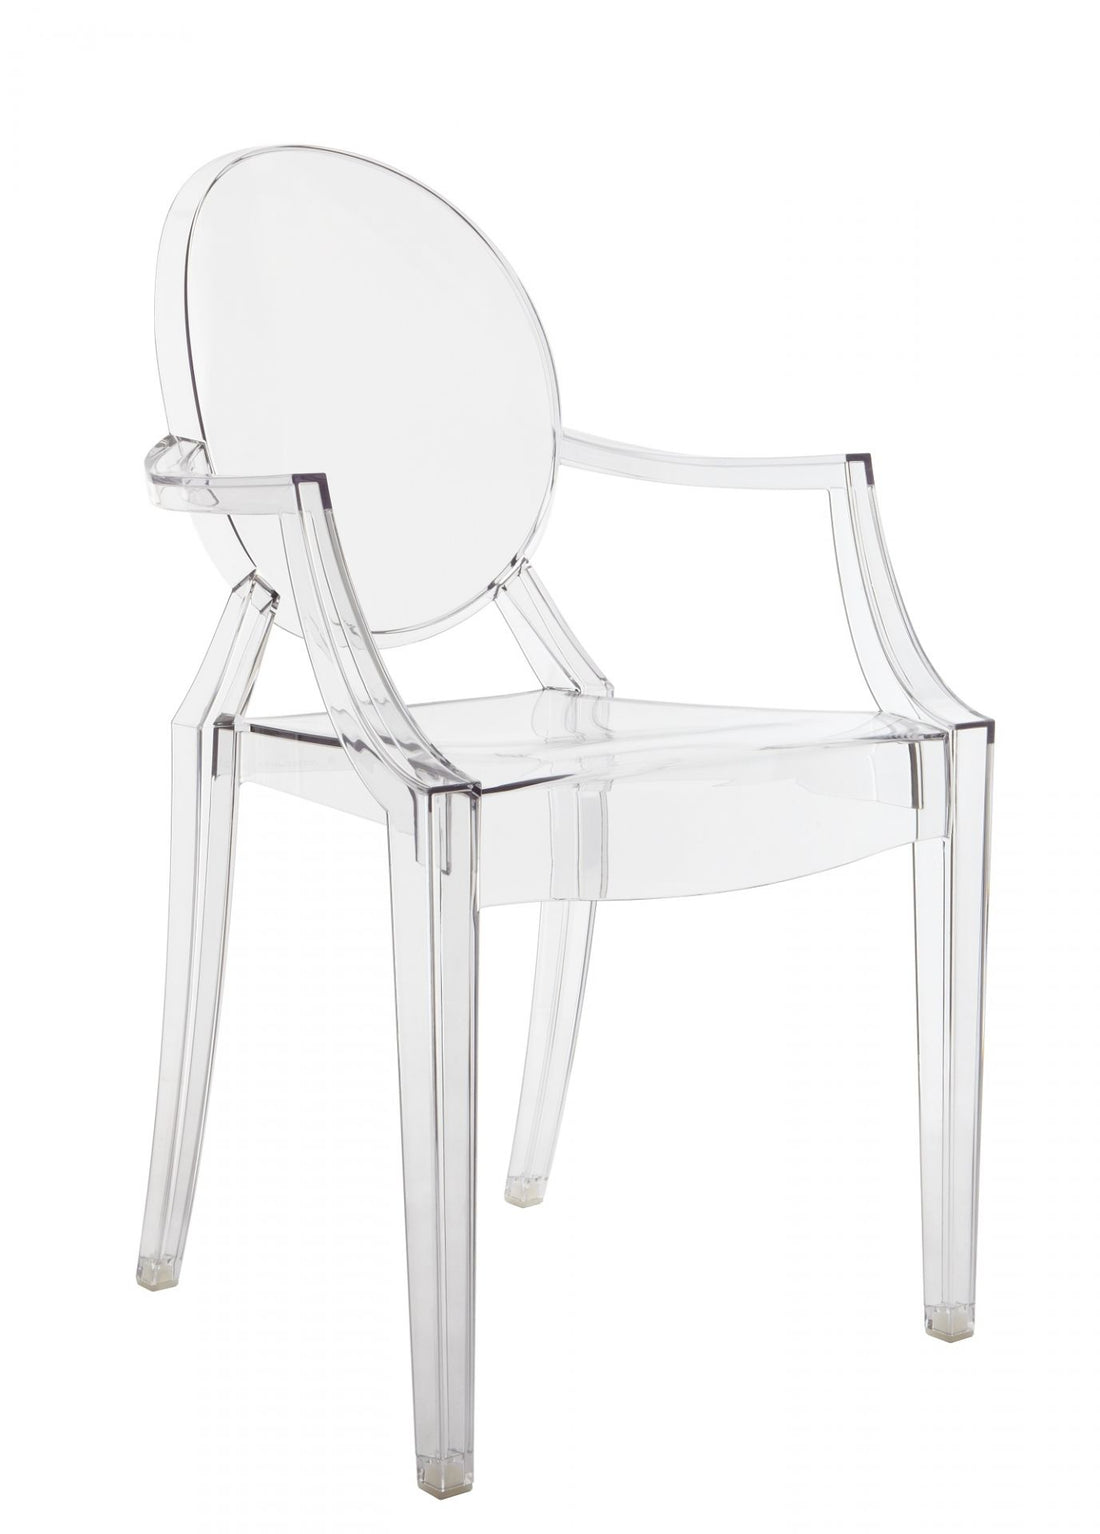 The Ghost chair, a postmodern neoclassical chair